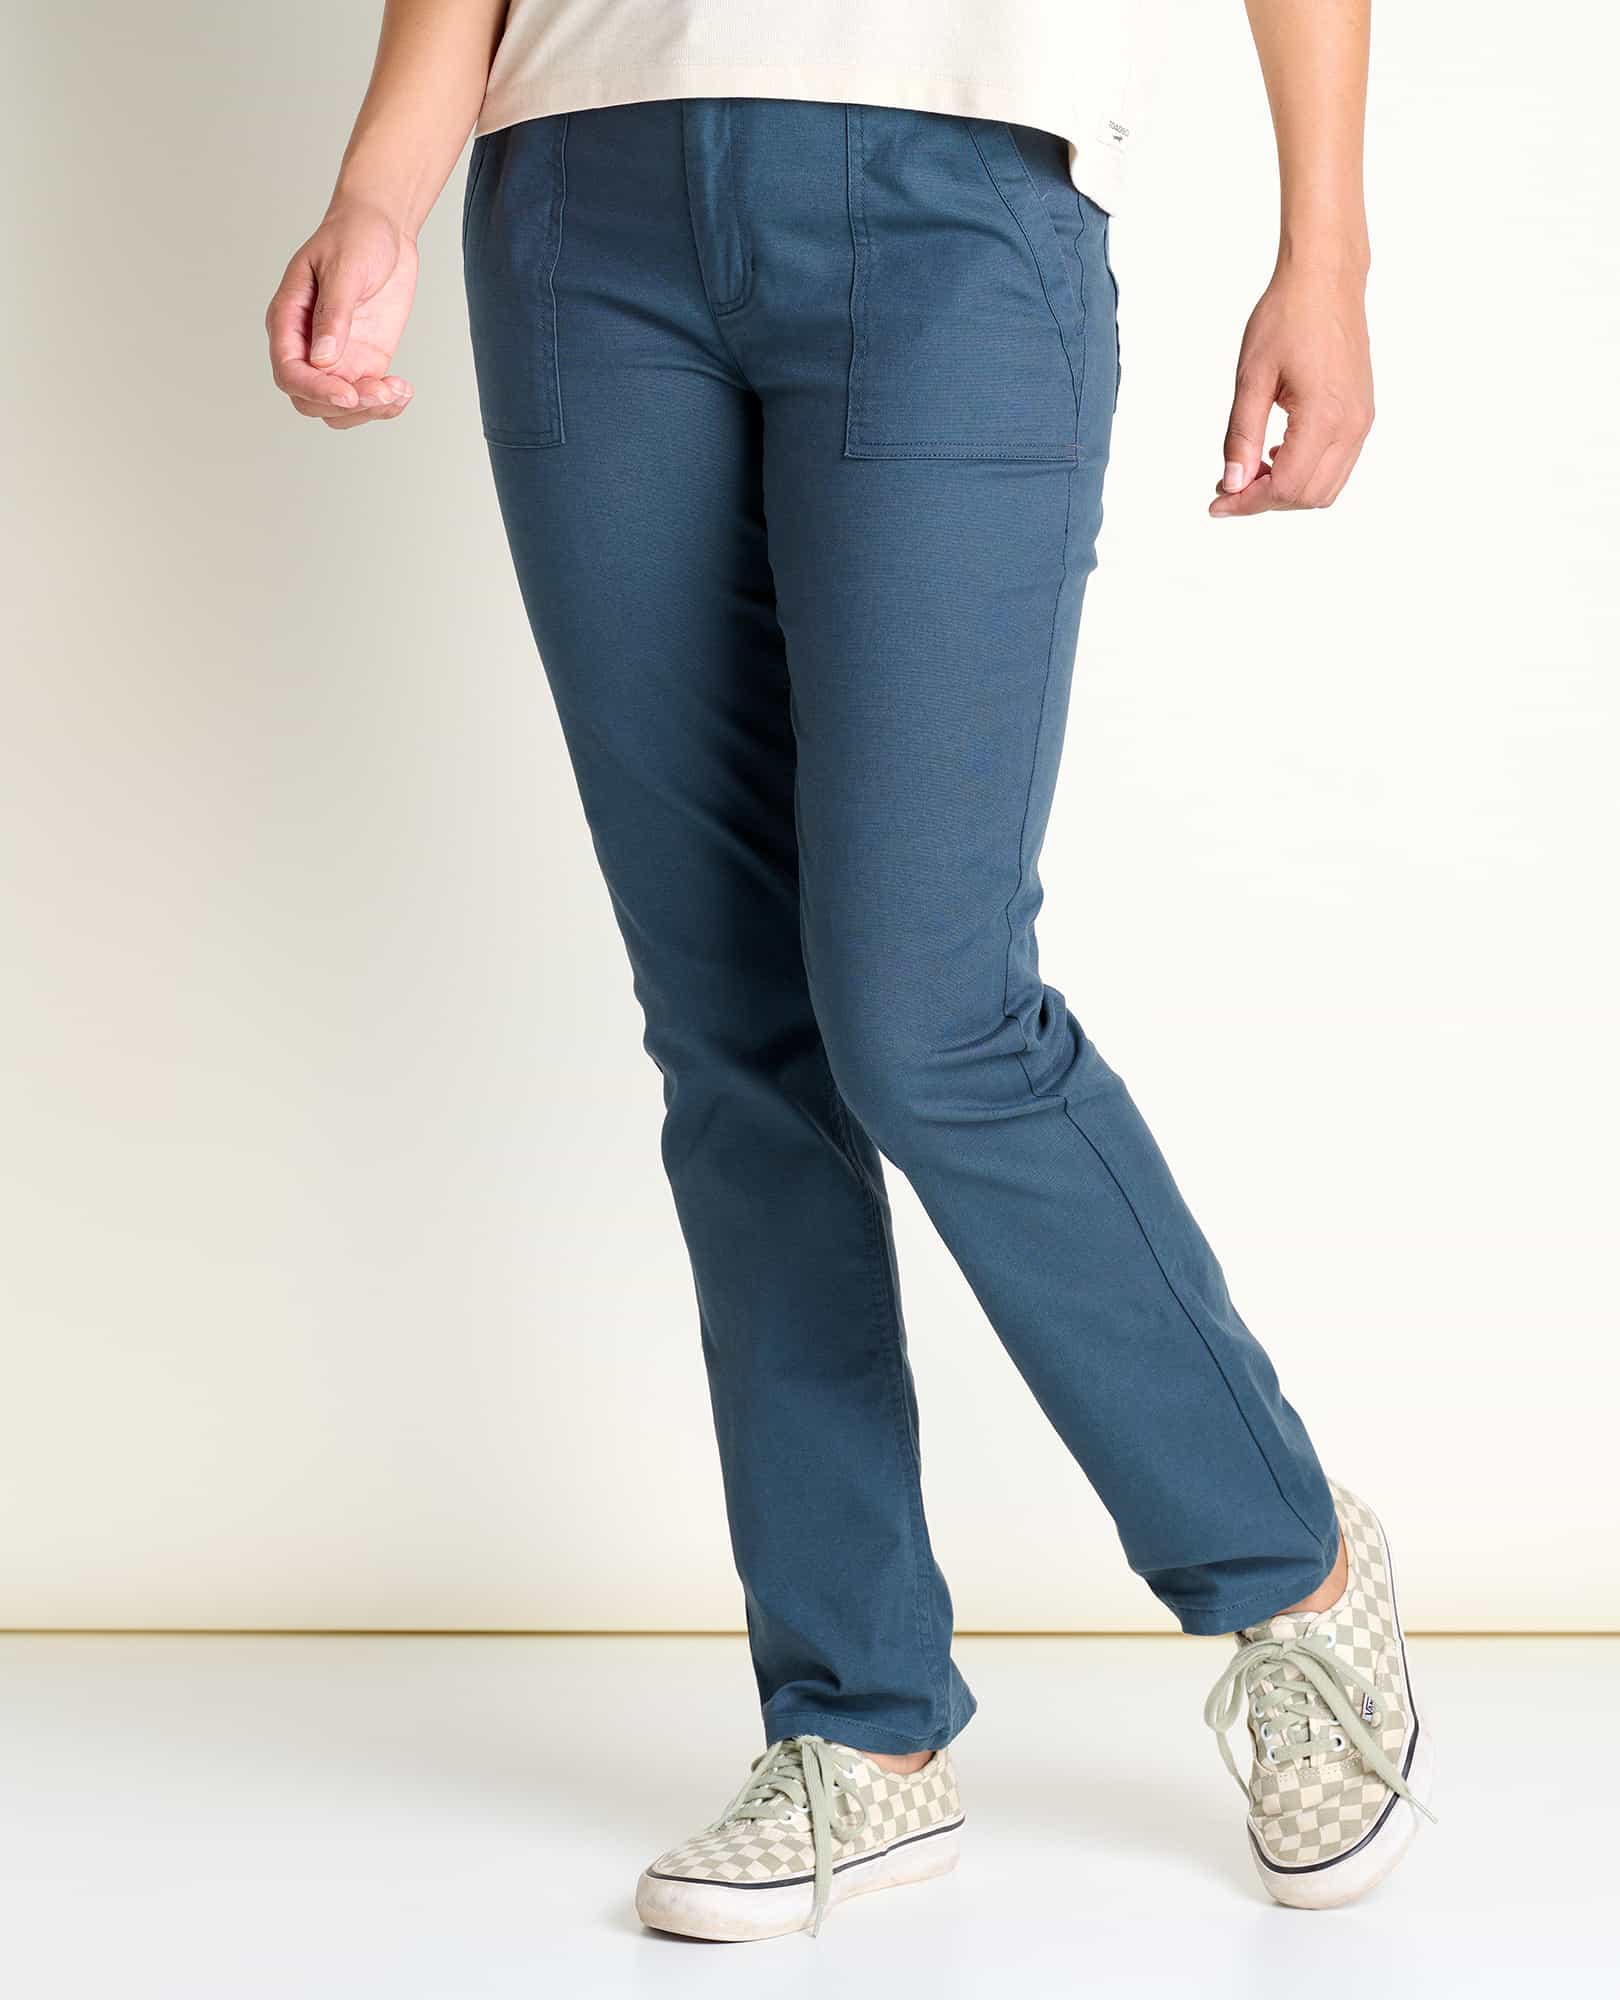 Brilliant Basics Women's Short Length Skinny Work Pant - Black - Size 12